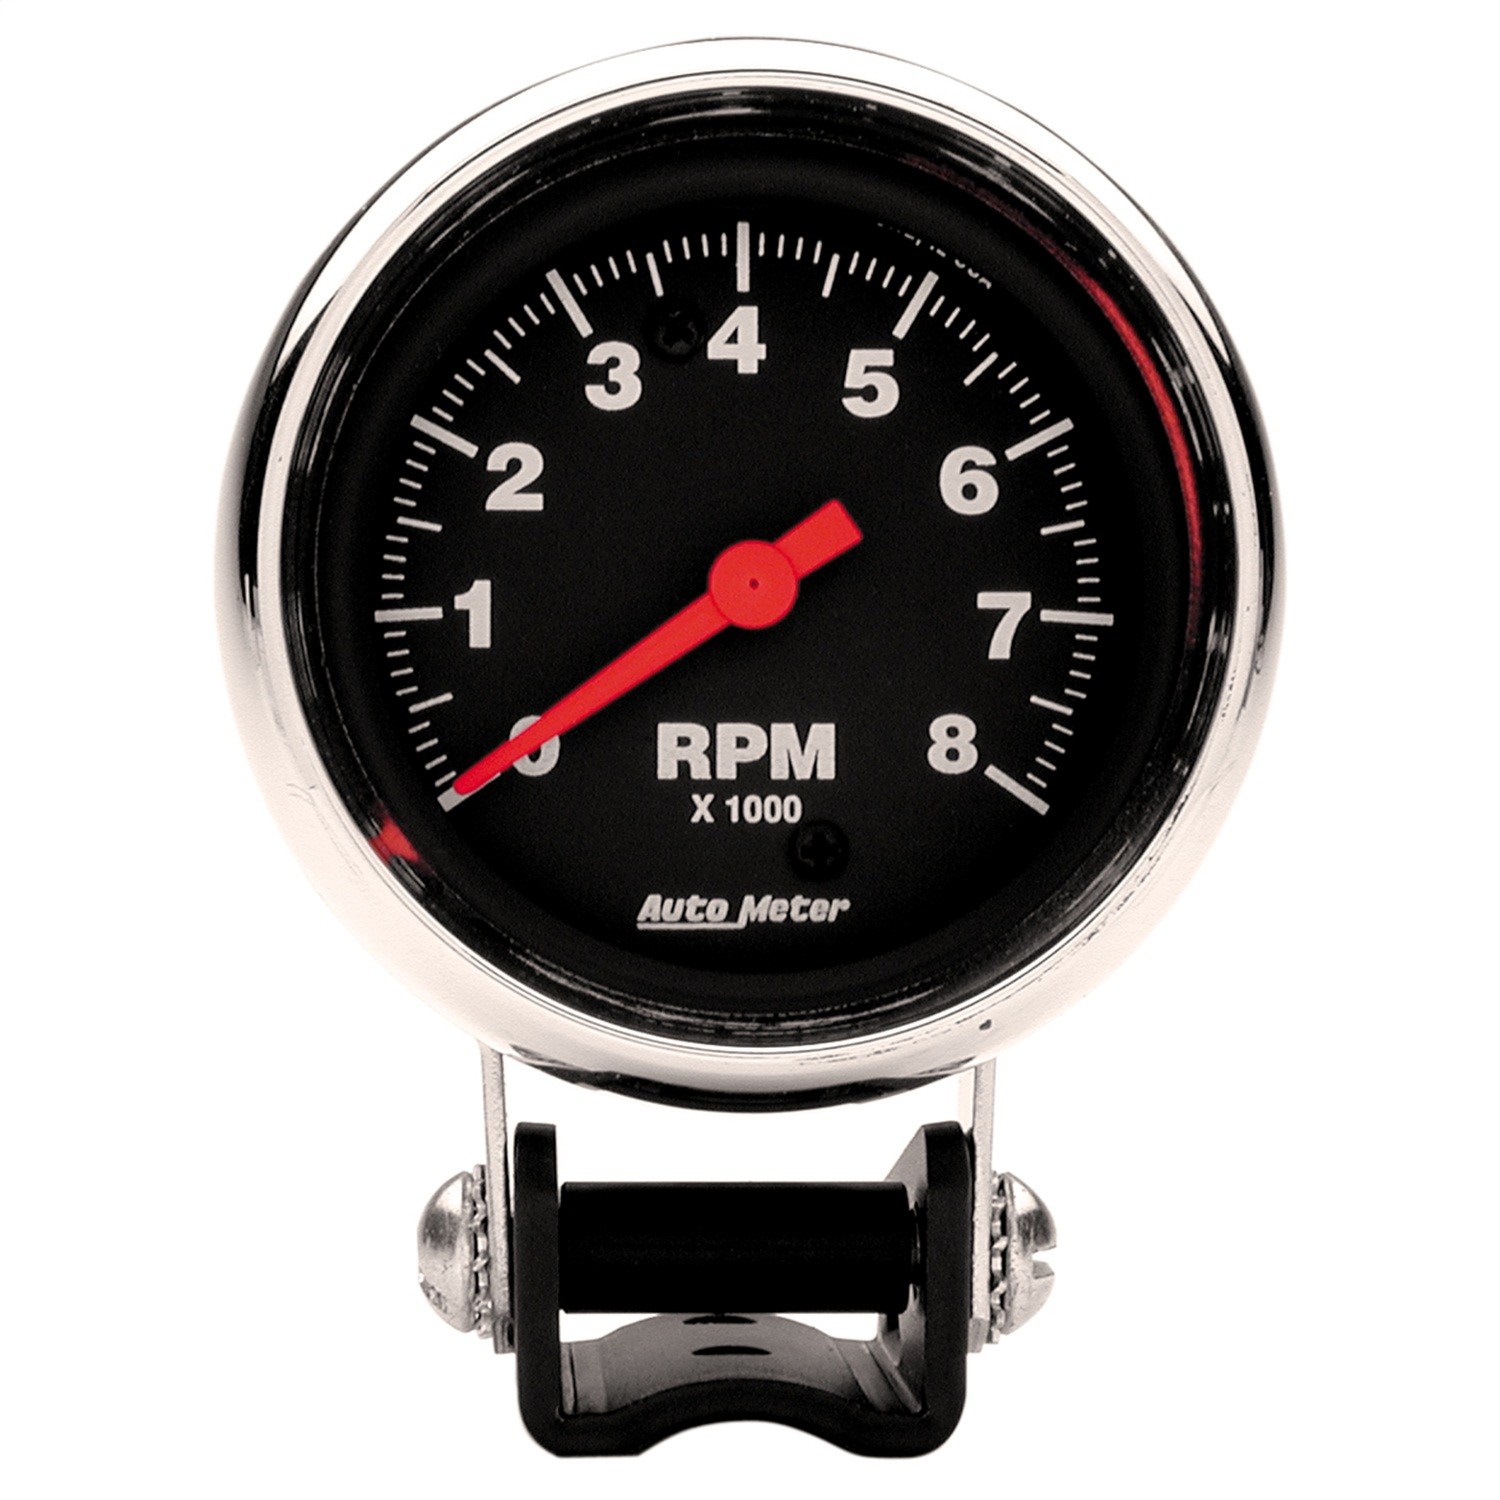 Auto Meter Auto Meter 2893 Performance Tachometer